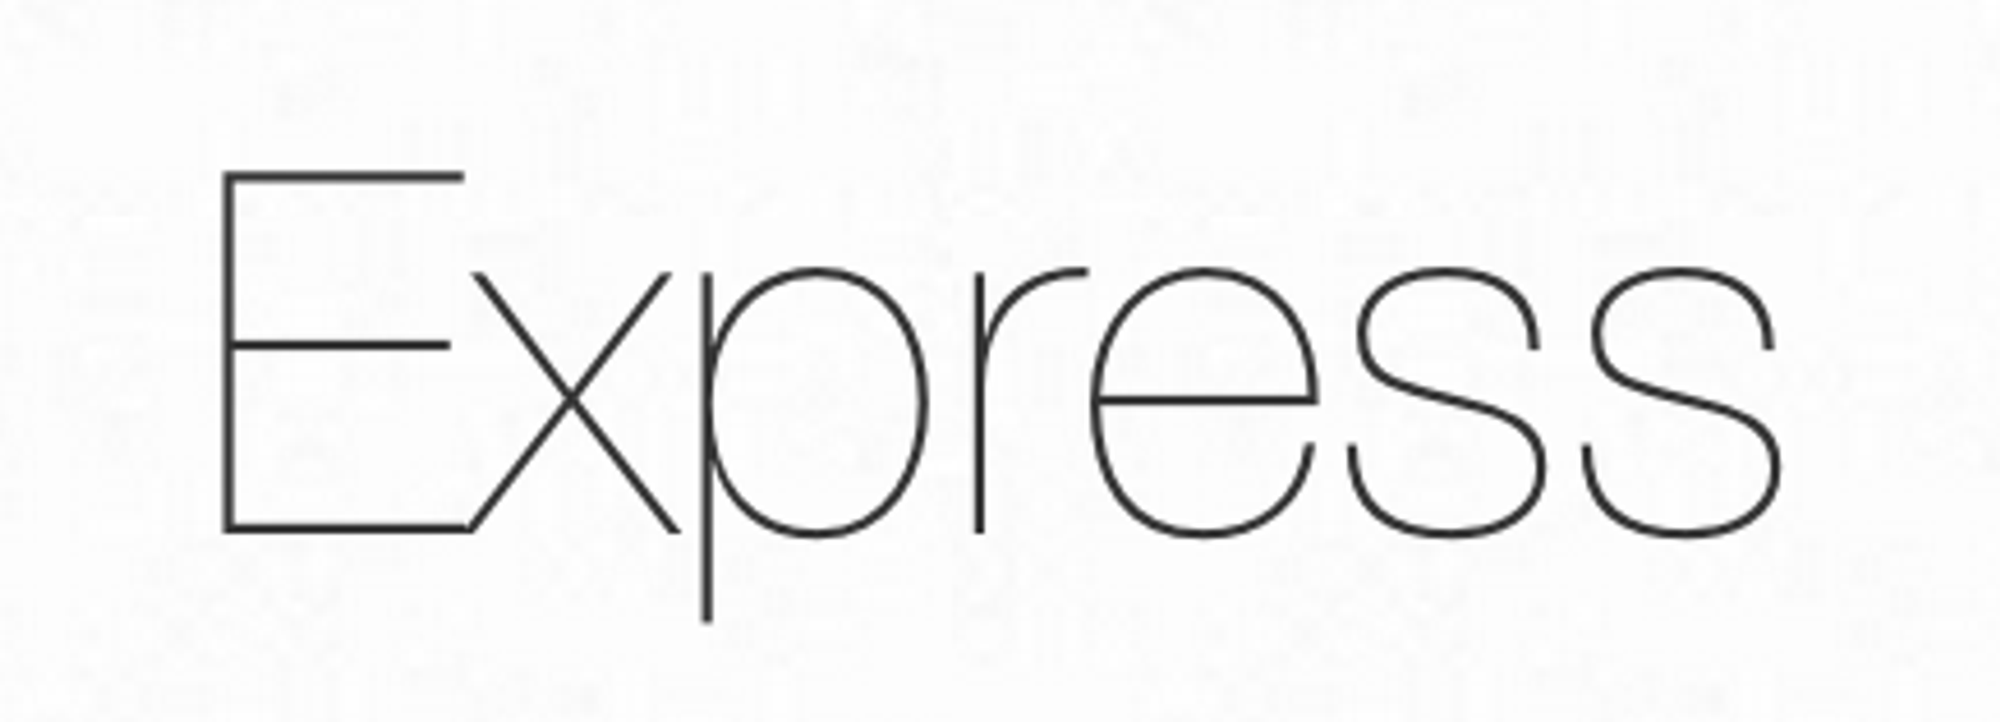 Express - Node.js Web 应用程序框架 - Express 中文文档 | Express 中文网